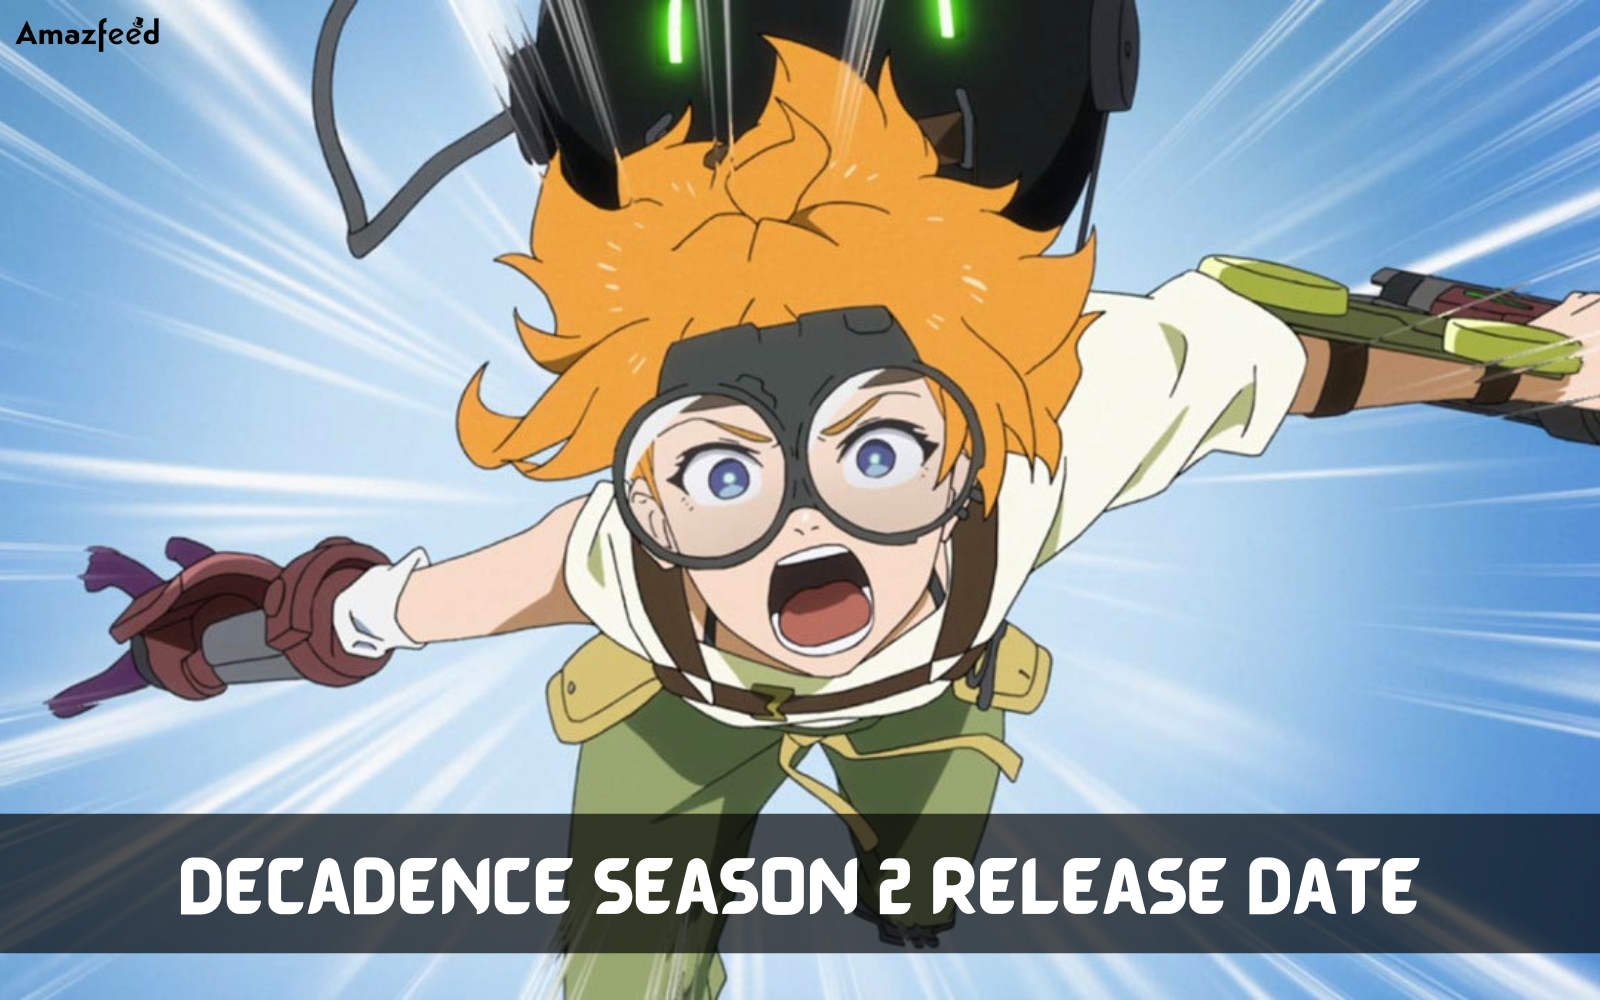 Decadence season 2 release date